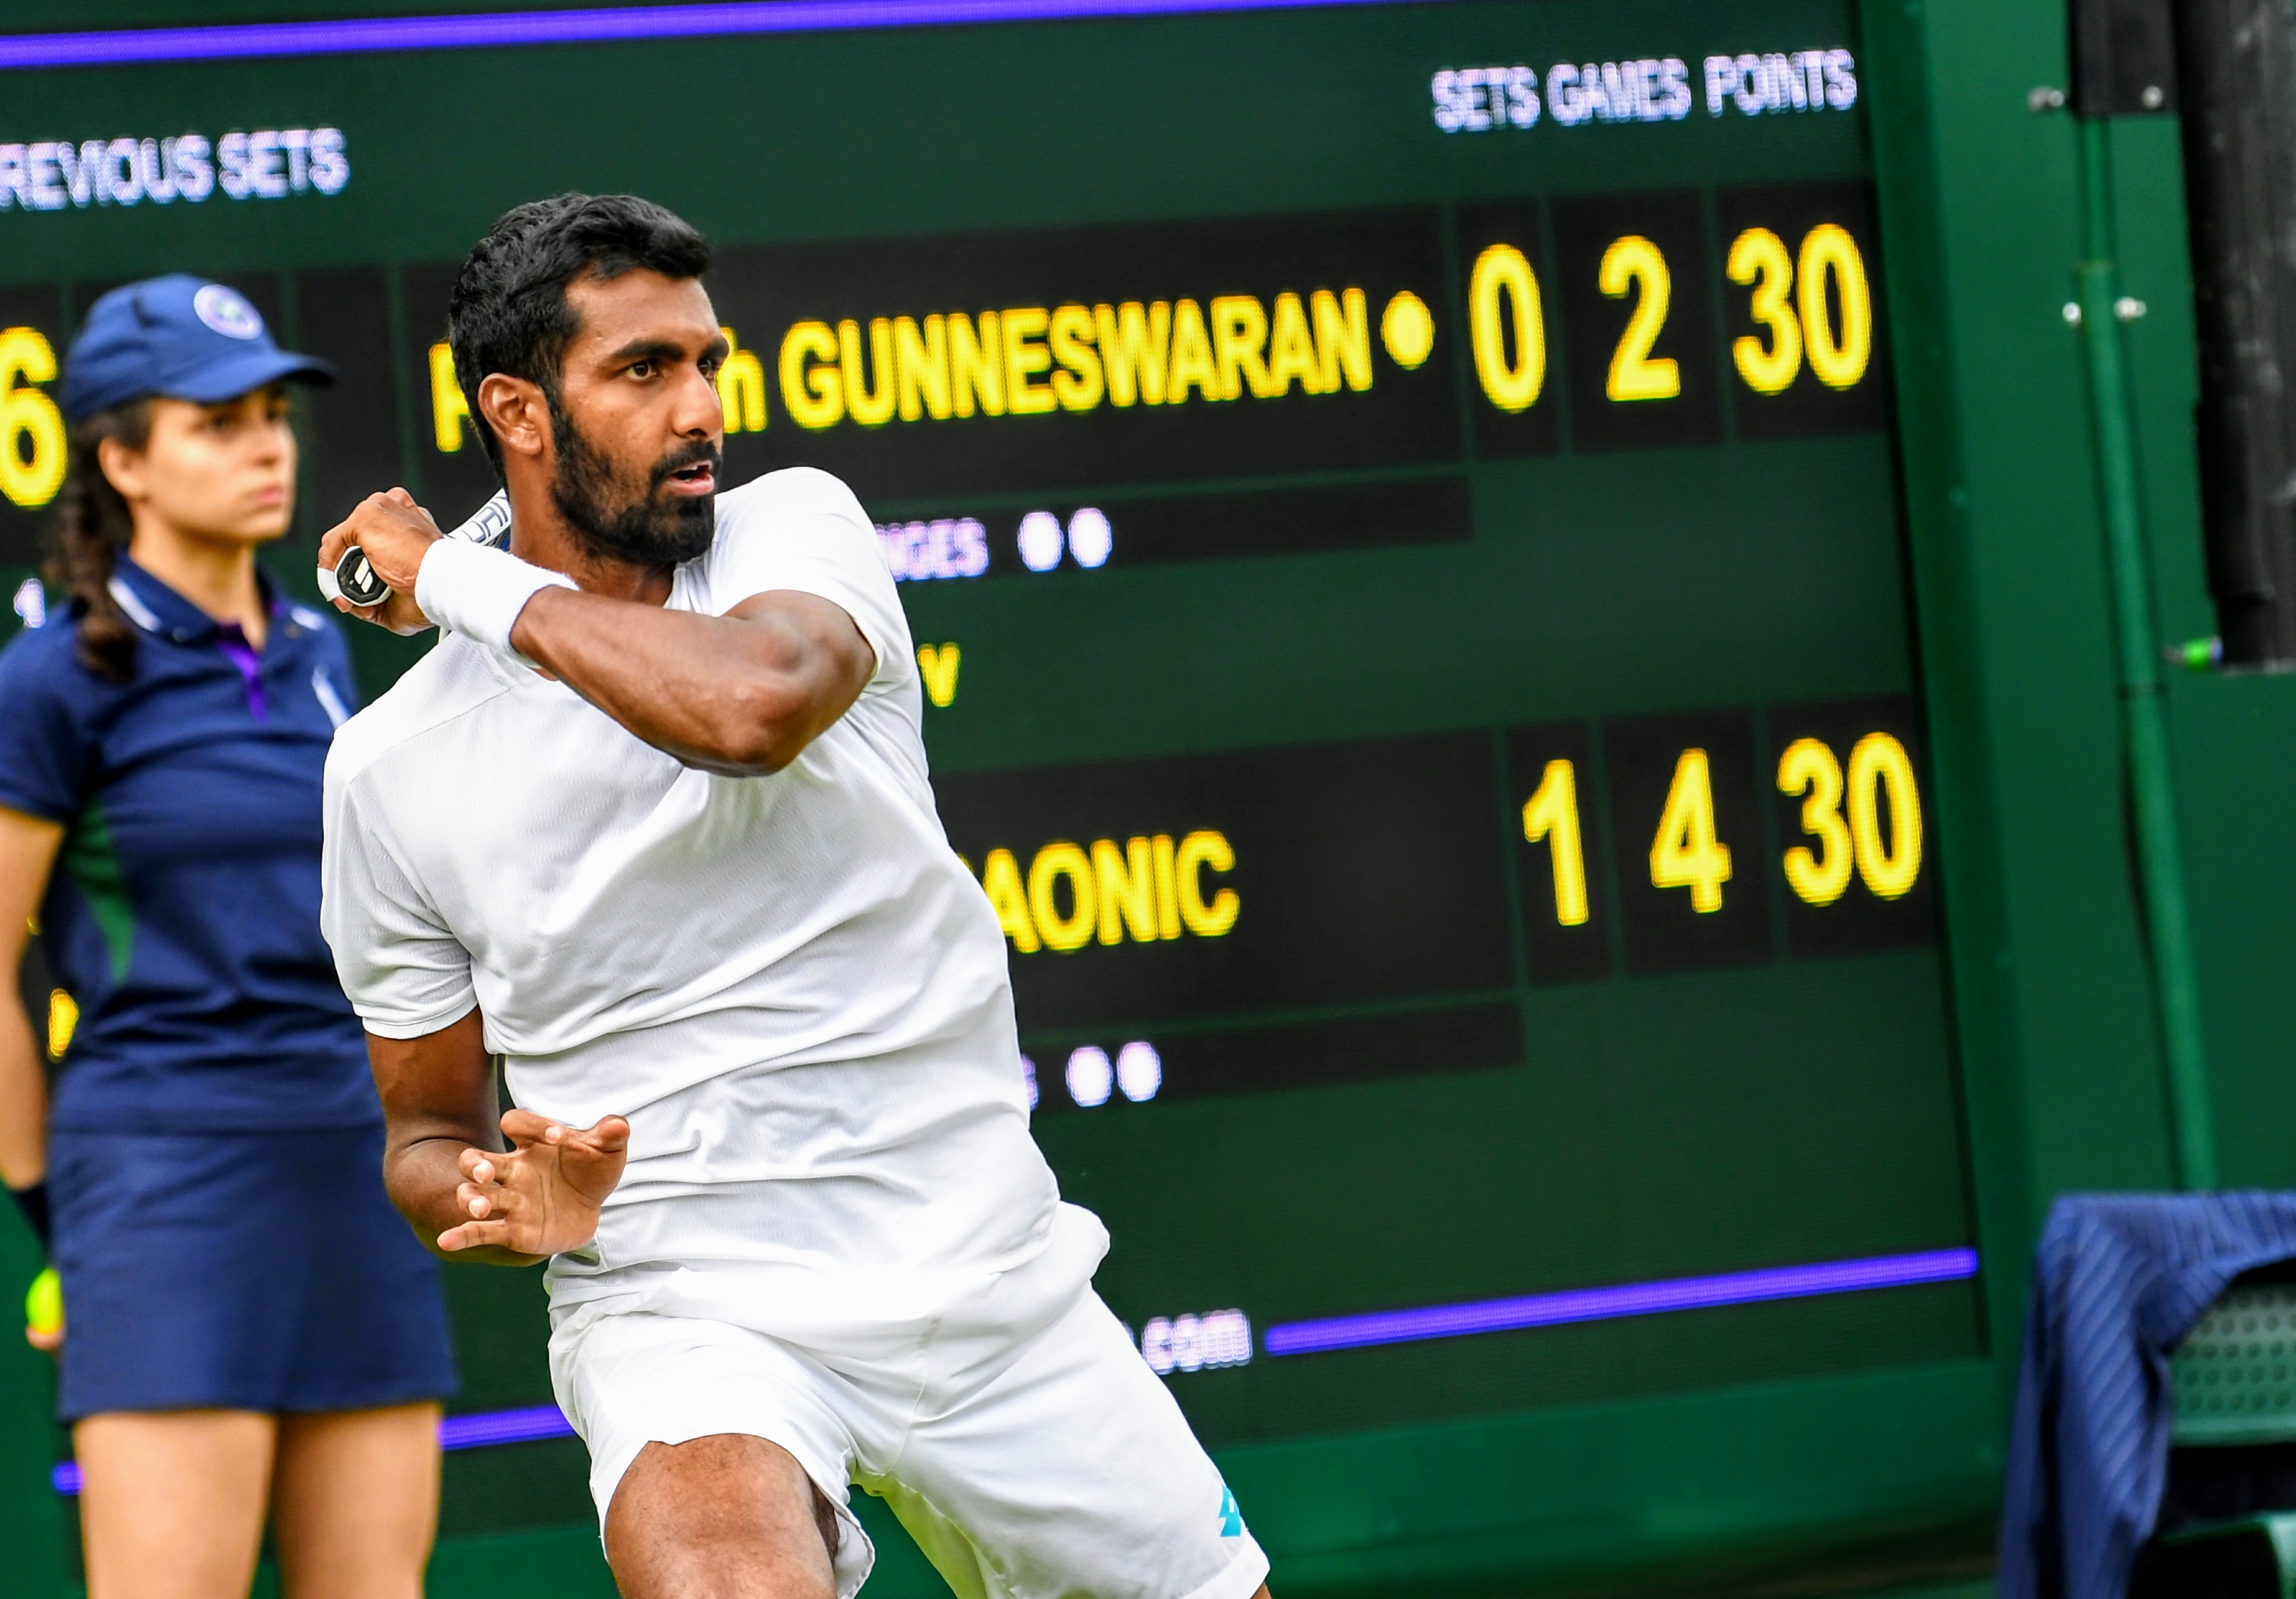 Photos: Prajnesh Gunneswaran’s match at the Championships, Wimbledon